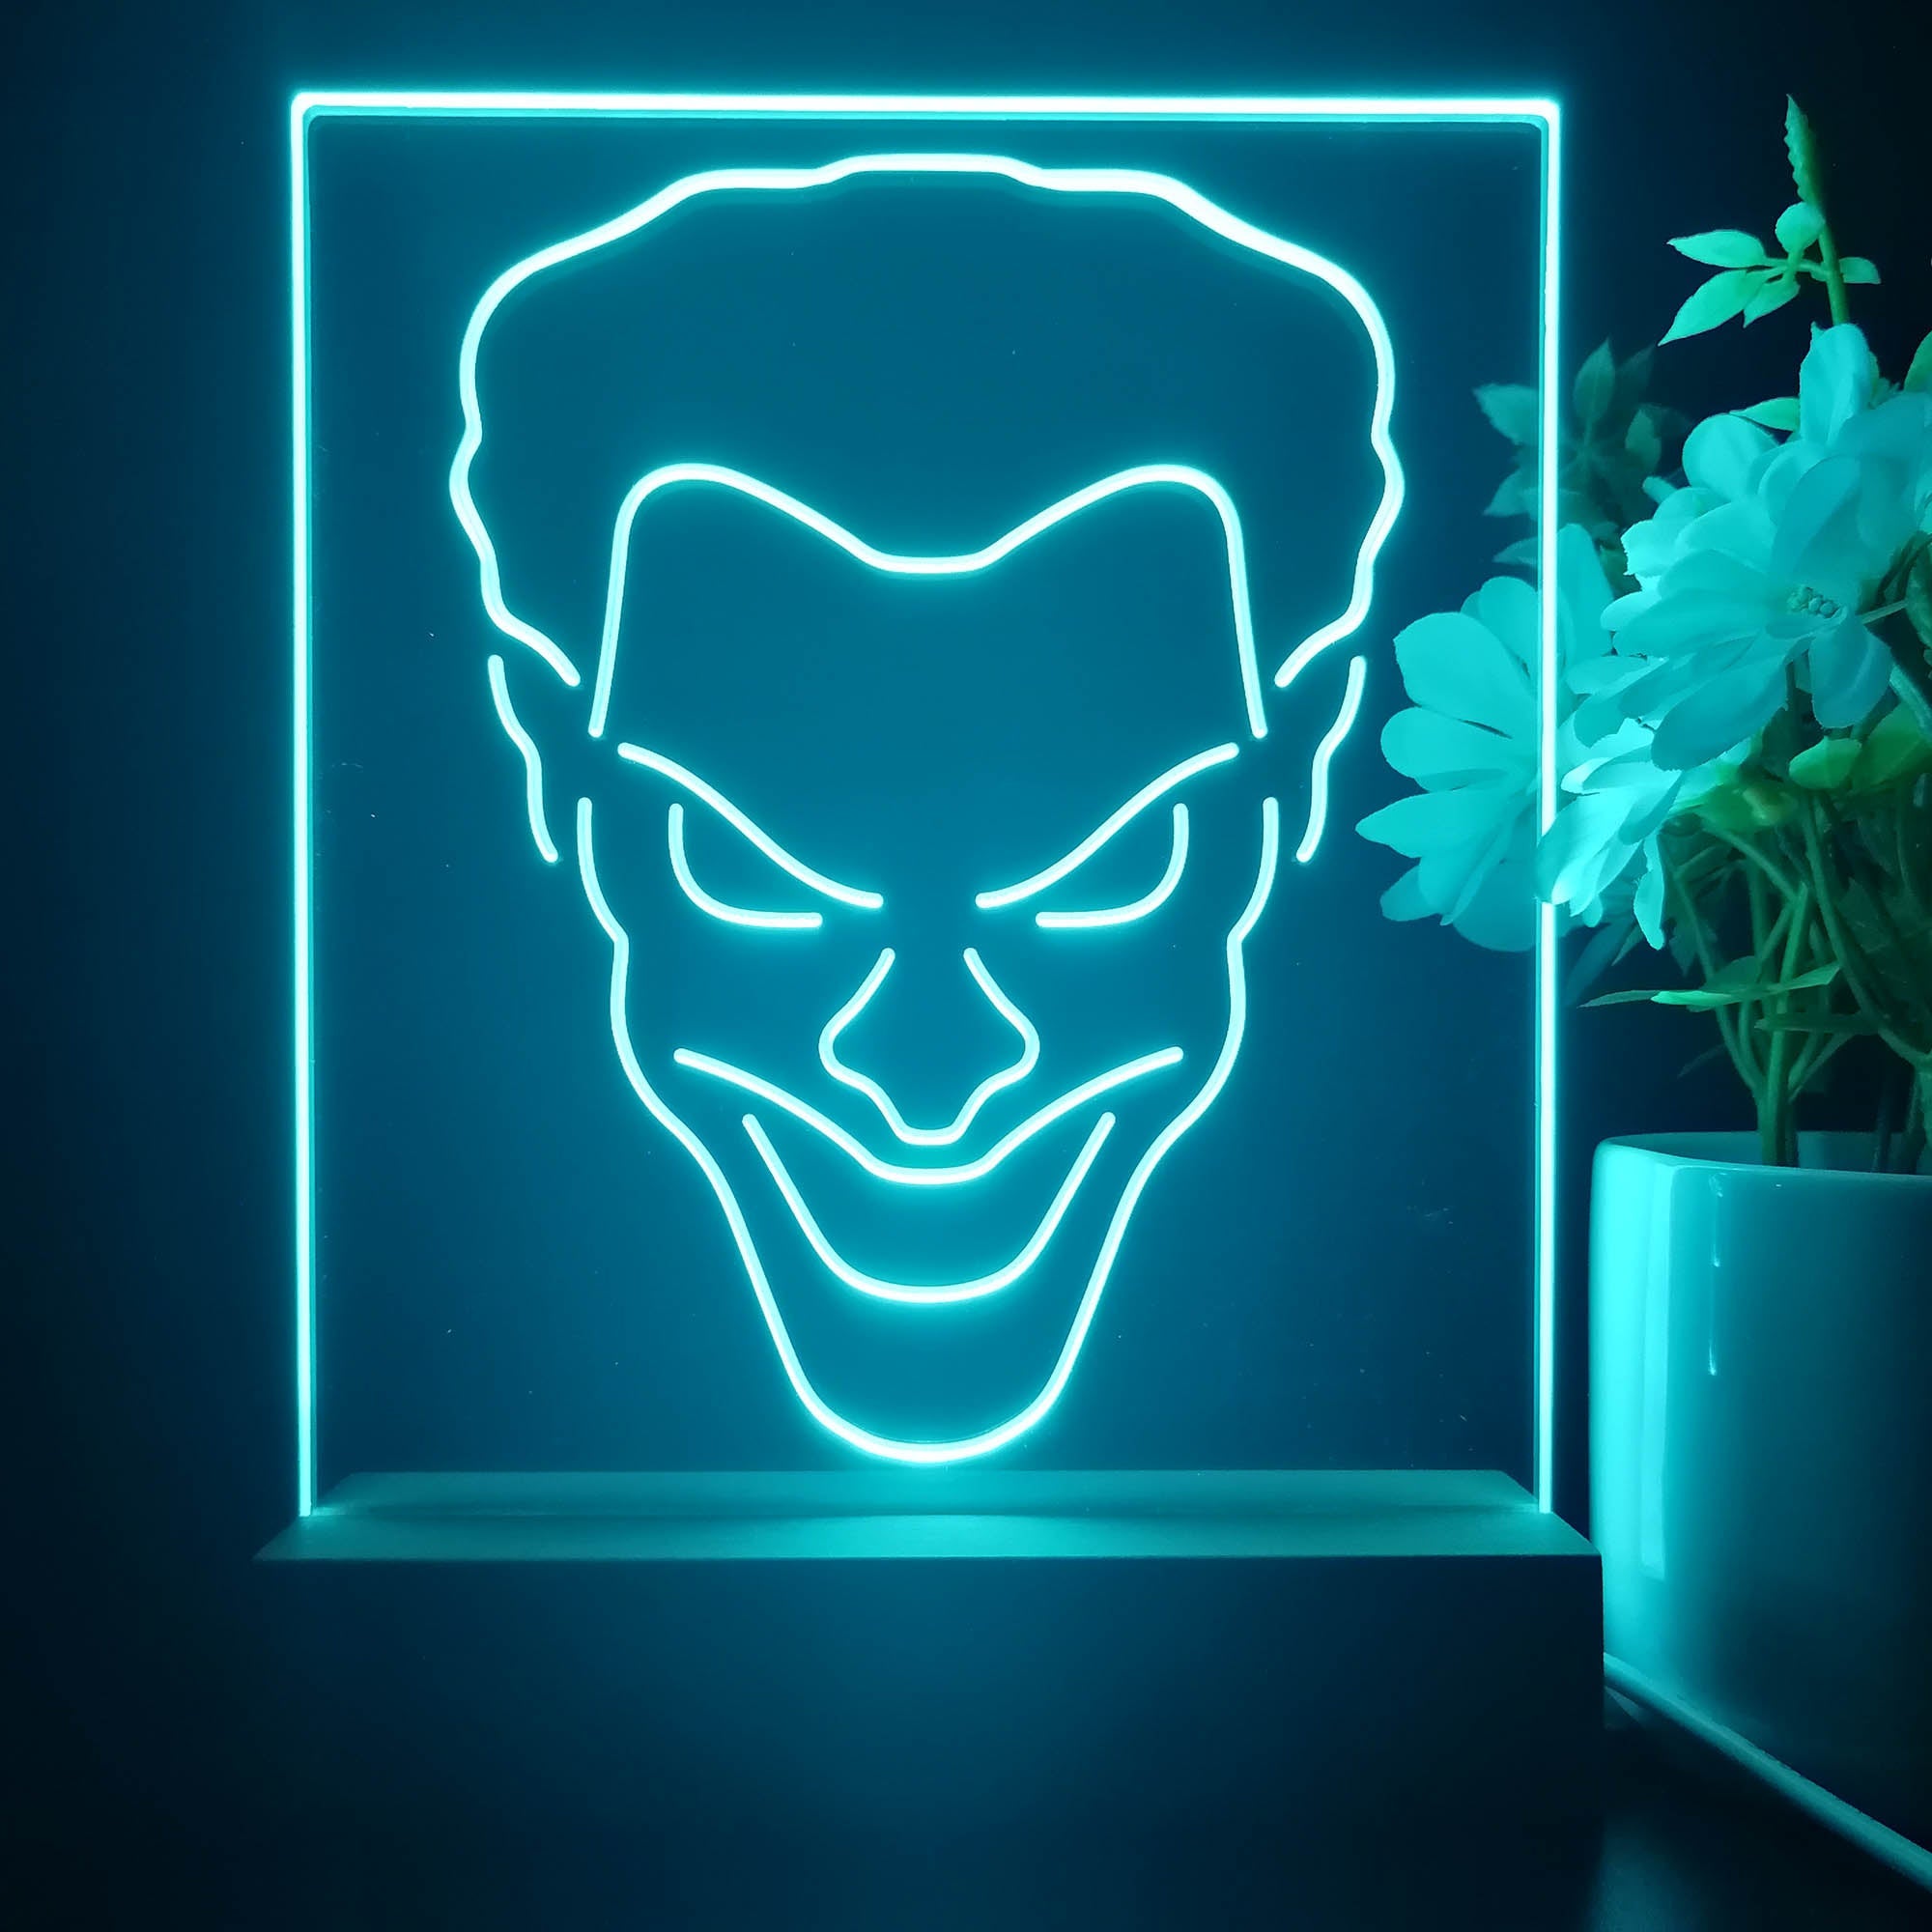 Joker DC Comics Hero 3D Illusion Night Light Desk Lamp